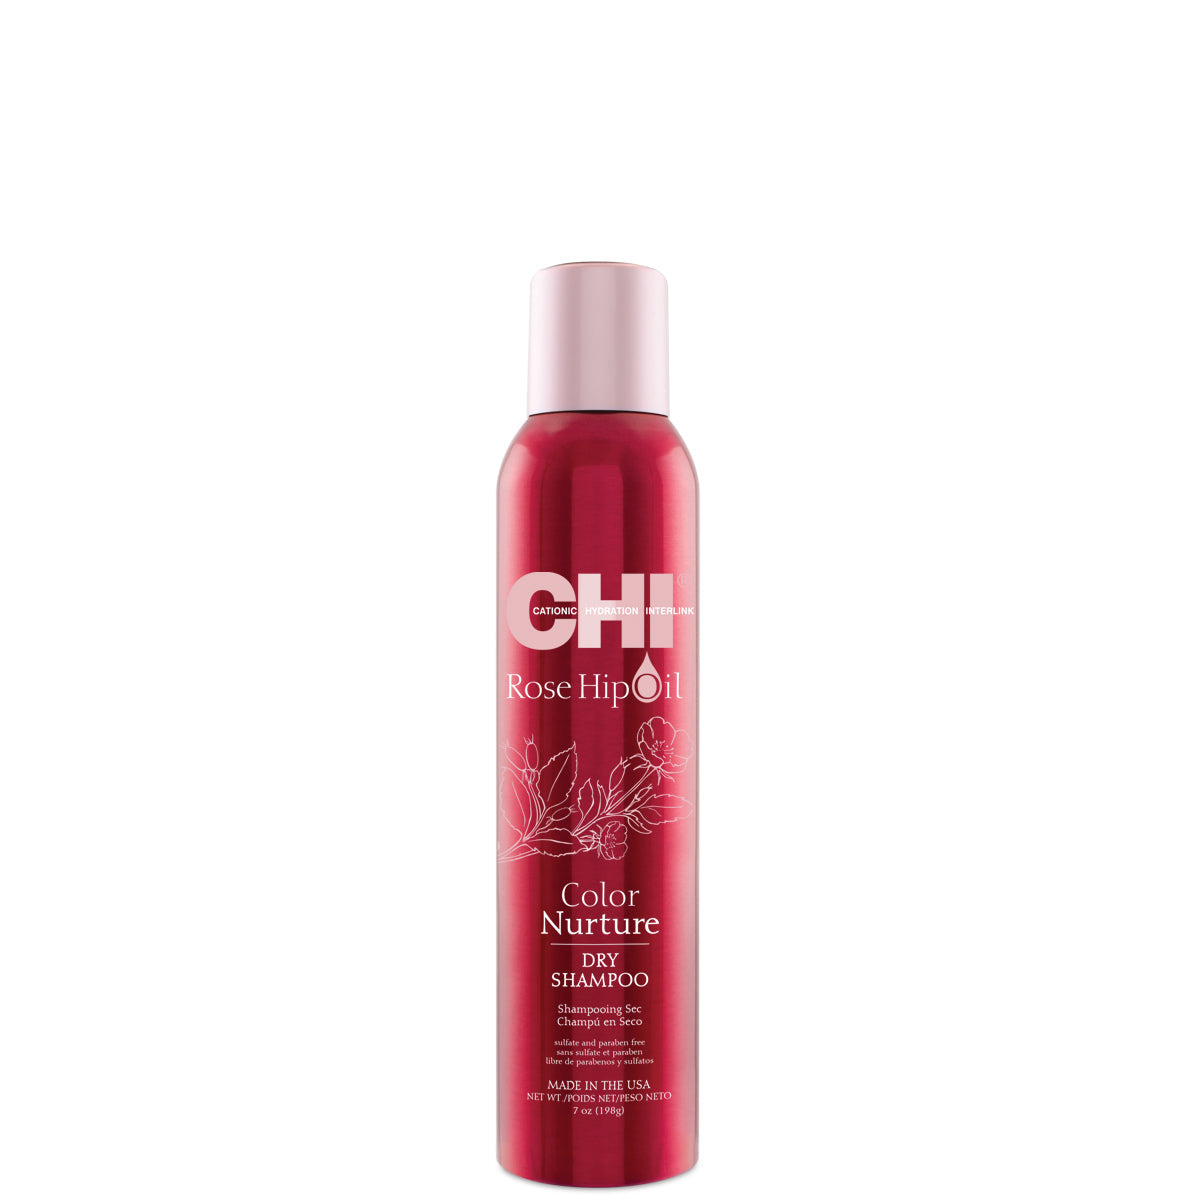 Chi Rose Hip Oil Dry Shampoo 198g